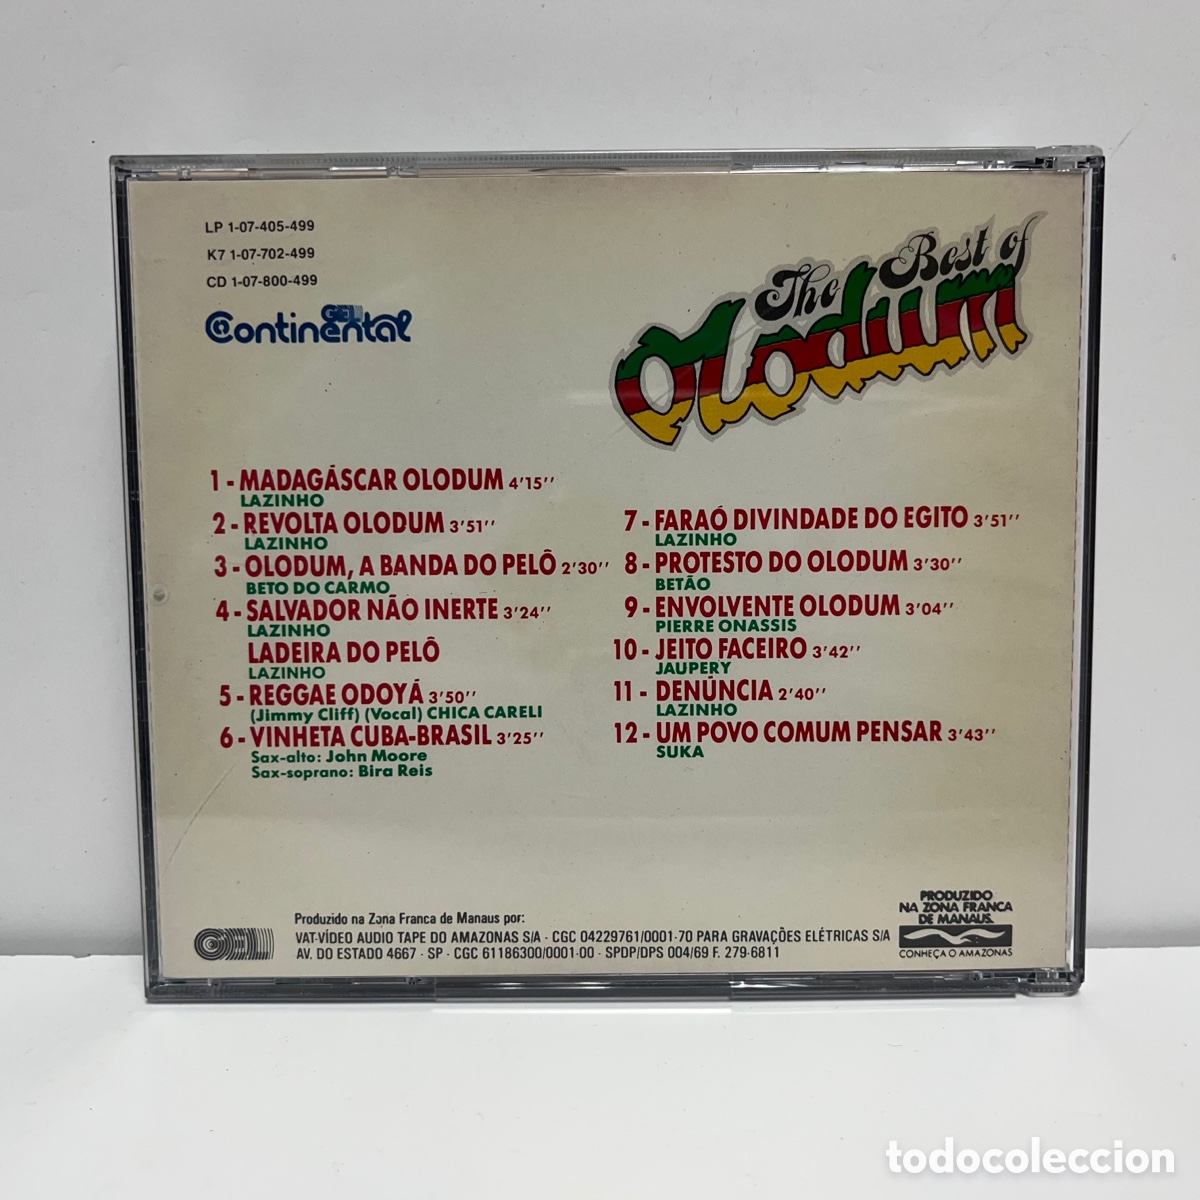 olodum - the best of olodum (cd) - Comprar CD de Música Latina no  todocoleccion